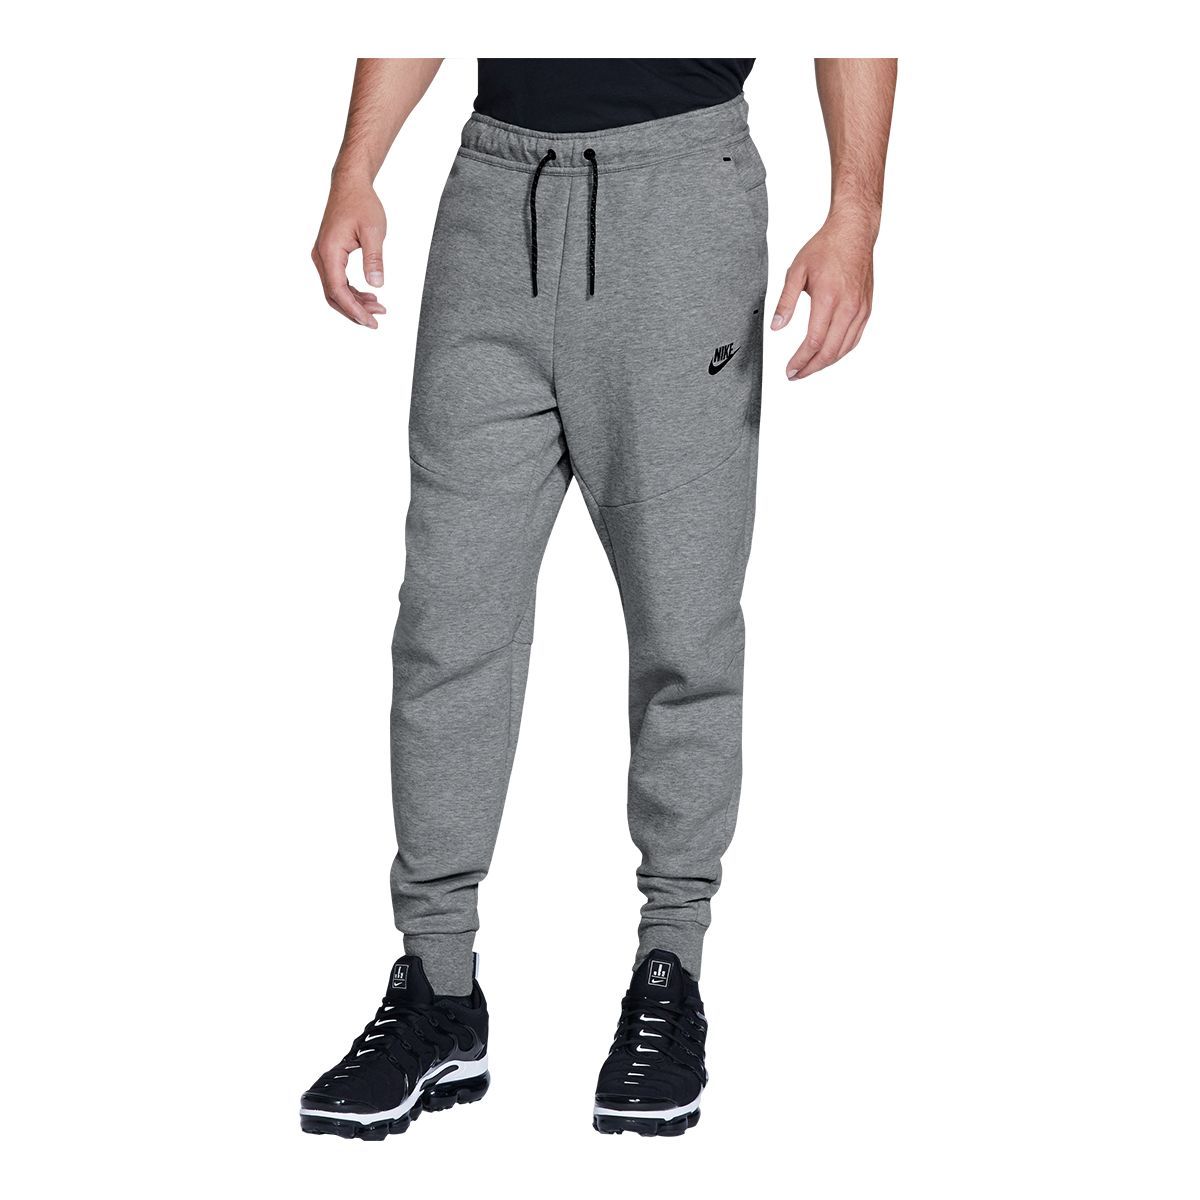 Nike Men's Tech Sweatpants, Fleece, Workout, Lightweight, Tapered ...